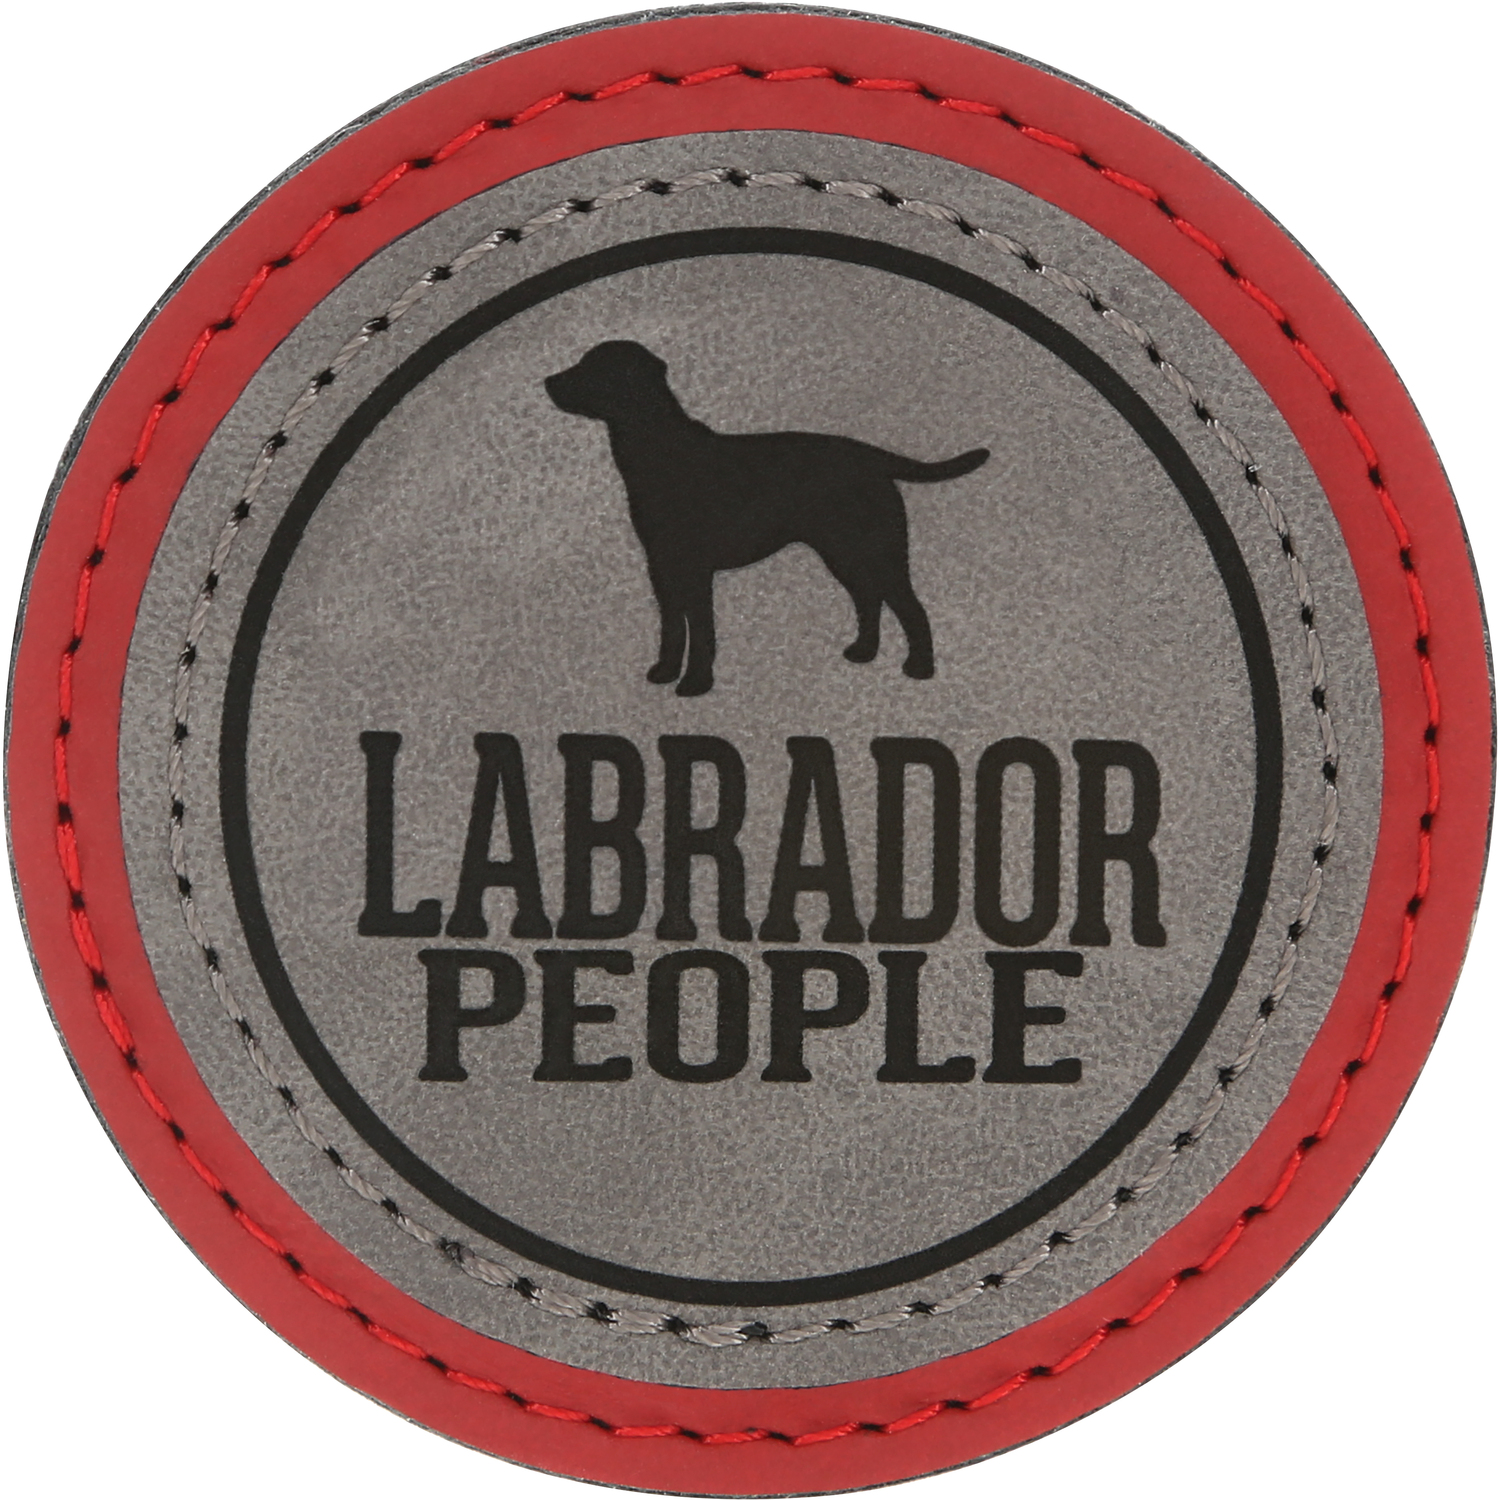 Labrador People by We Pets - Labrador People - 2.5" Magnet